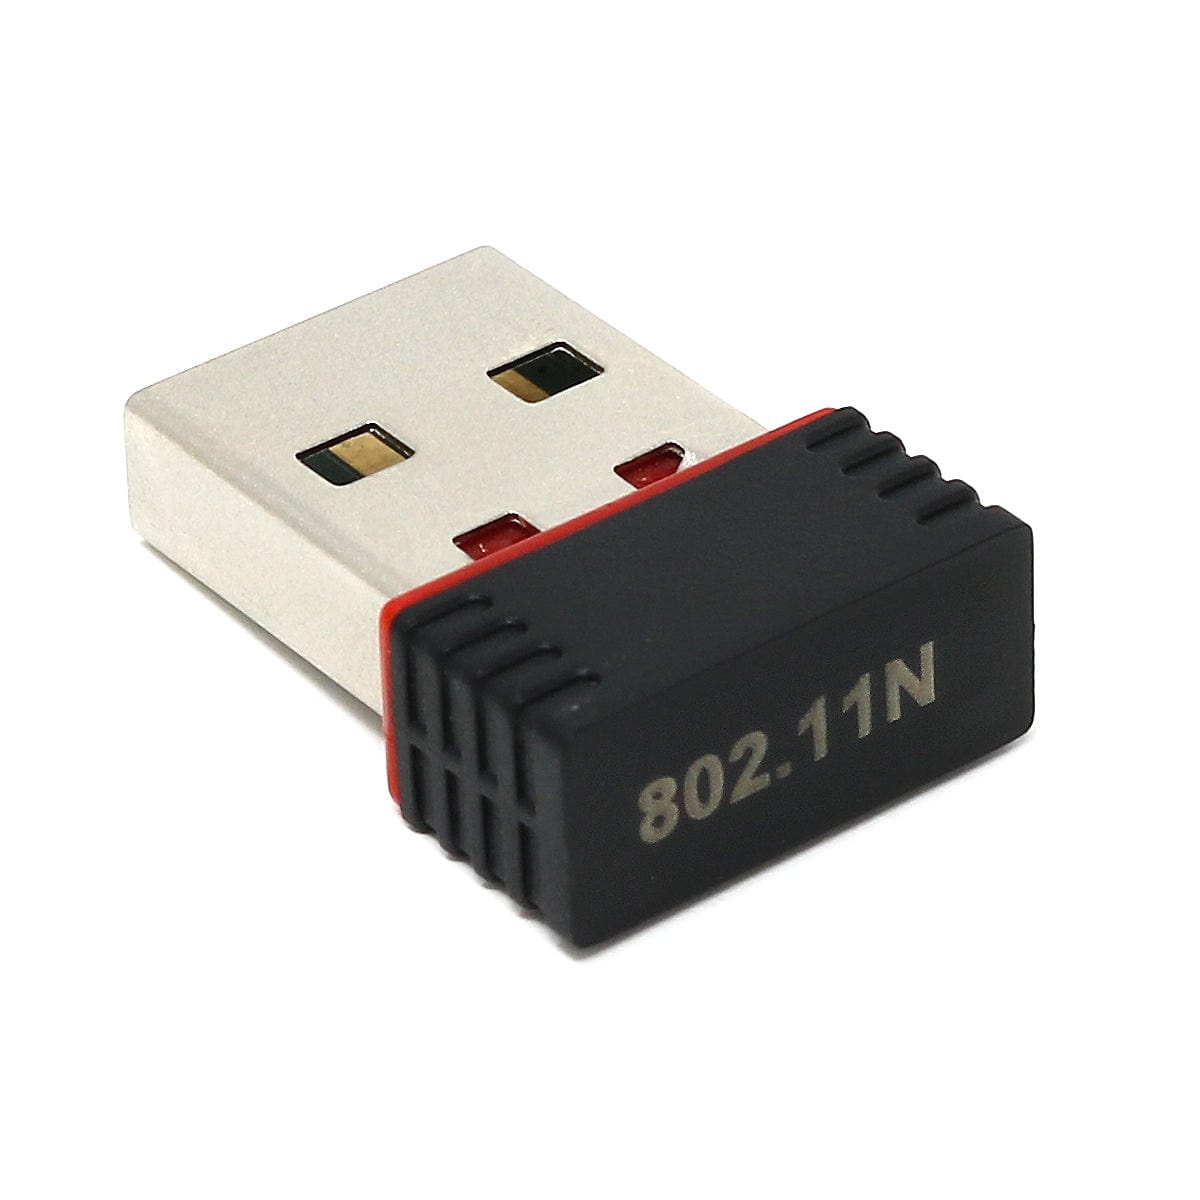 rookie Parametre St USB WiFi Adapter for Raspberry Pi | The Pi Hut